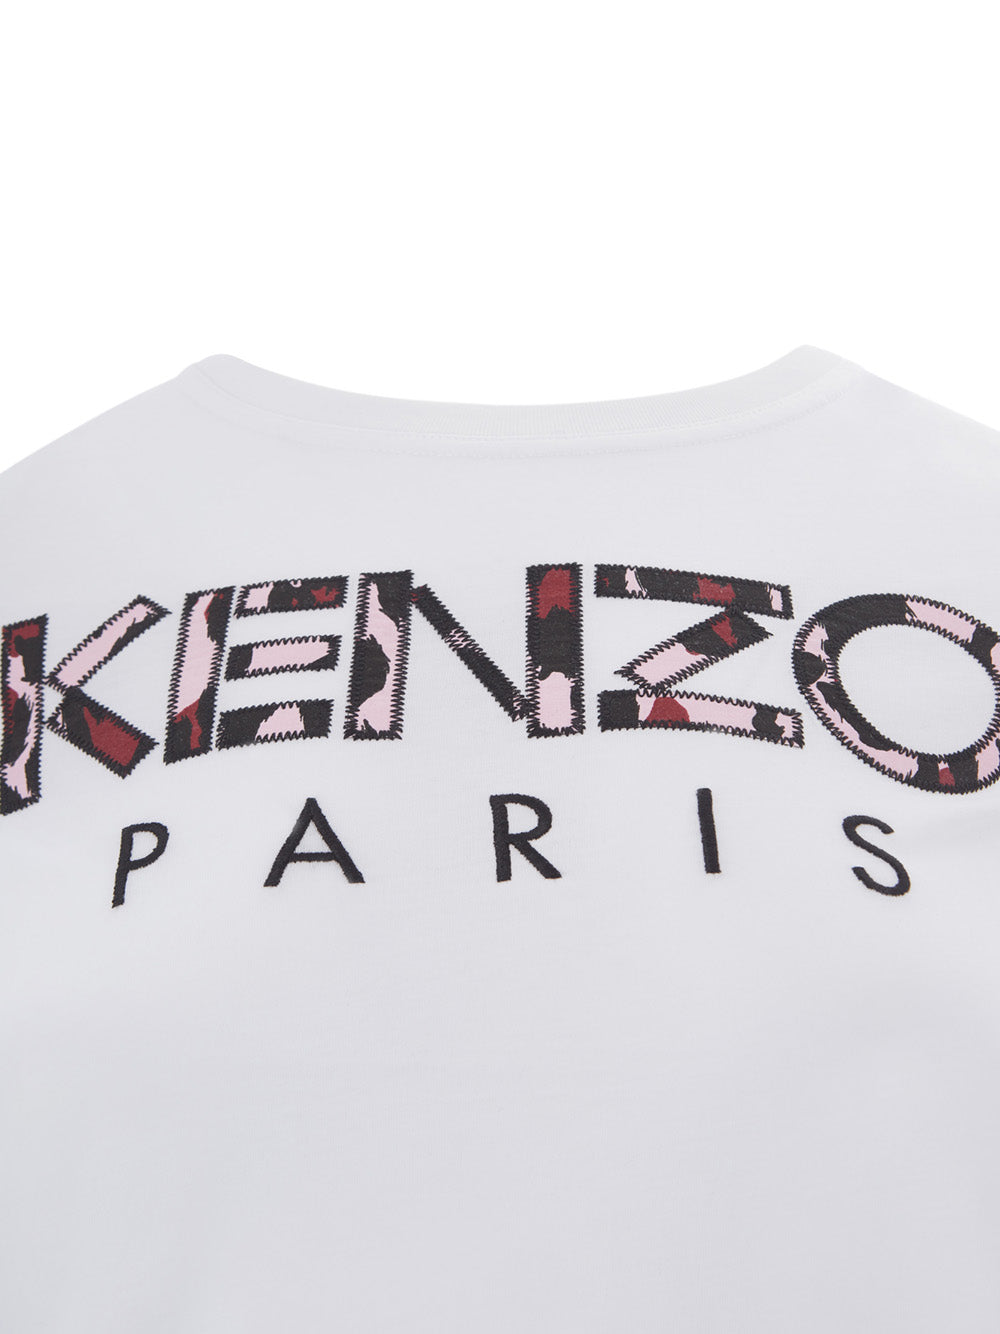 T-Shirt Bianca Kenzo con Logo Camouflage